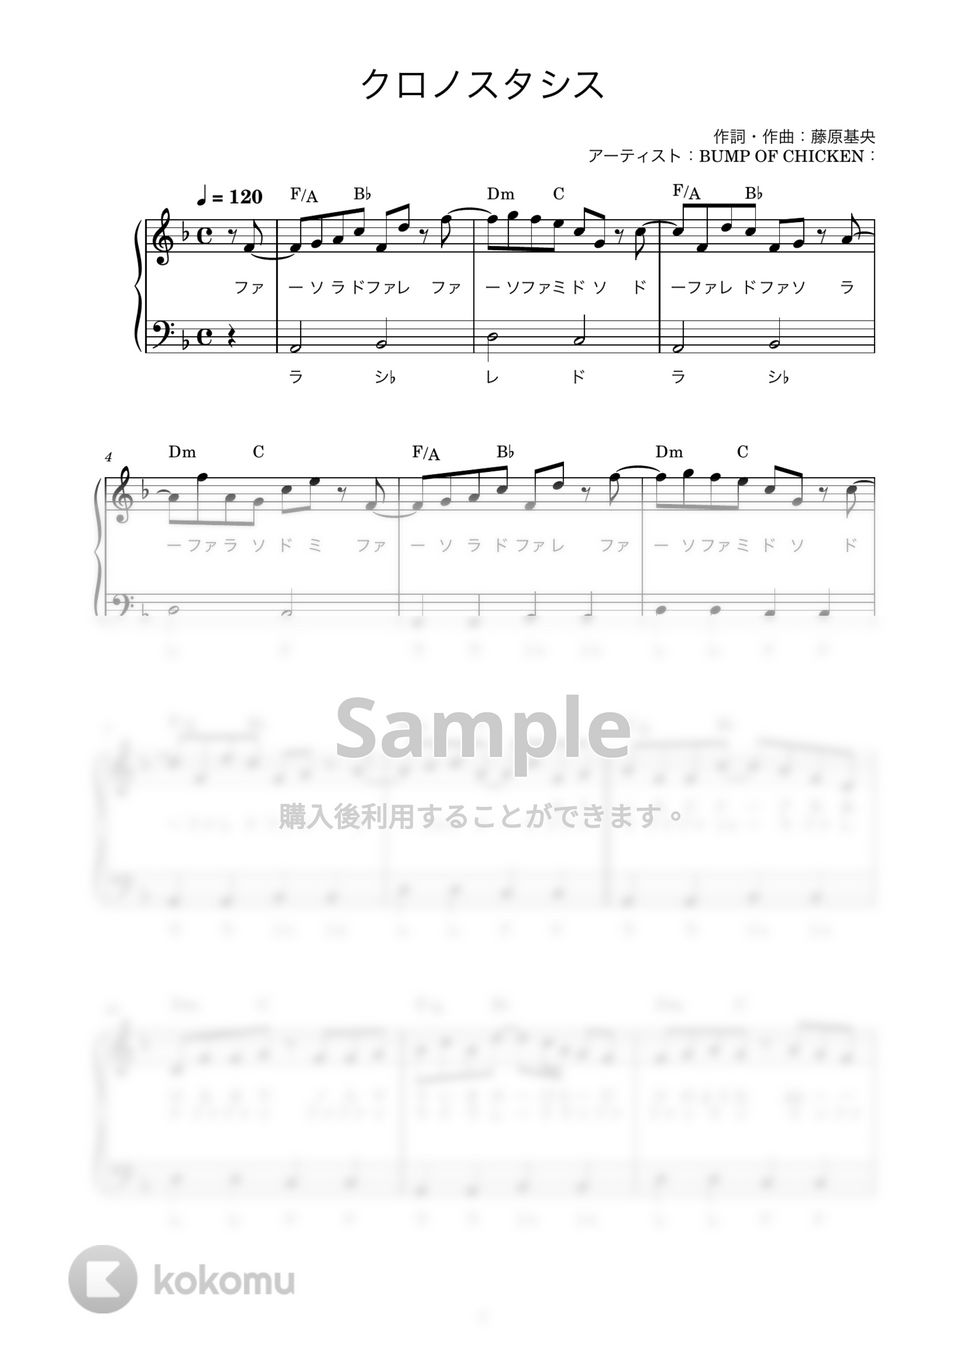 BUMP OF CHICKEN - クロノスタシス (かんたん / 歌詞付き / ドレミ付き / 初心者) by piano.tokyo